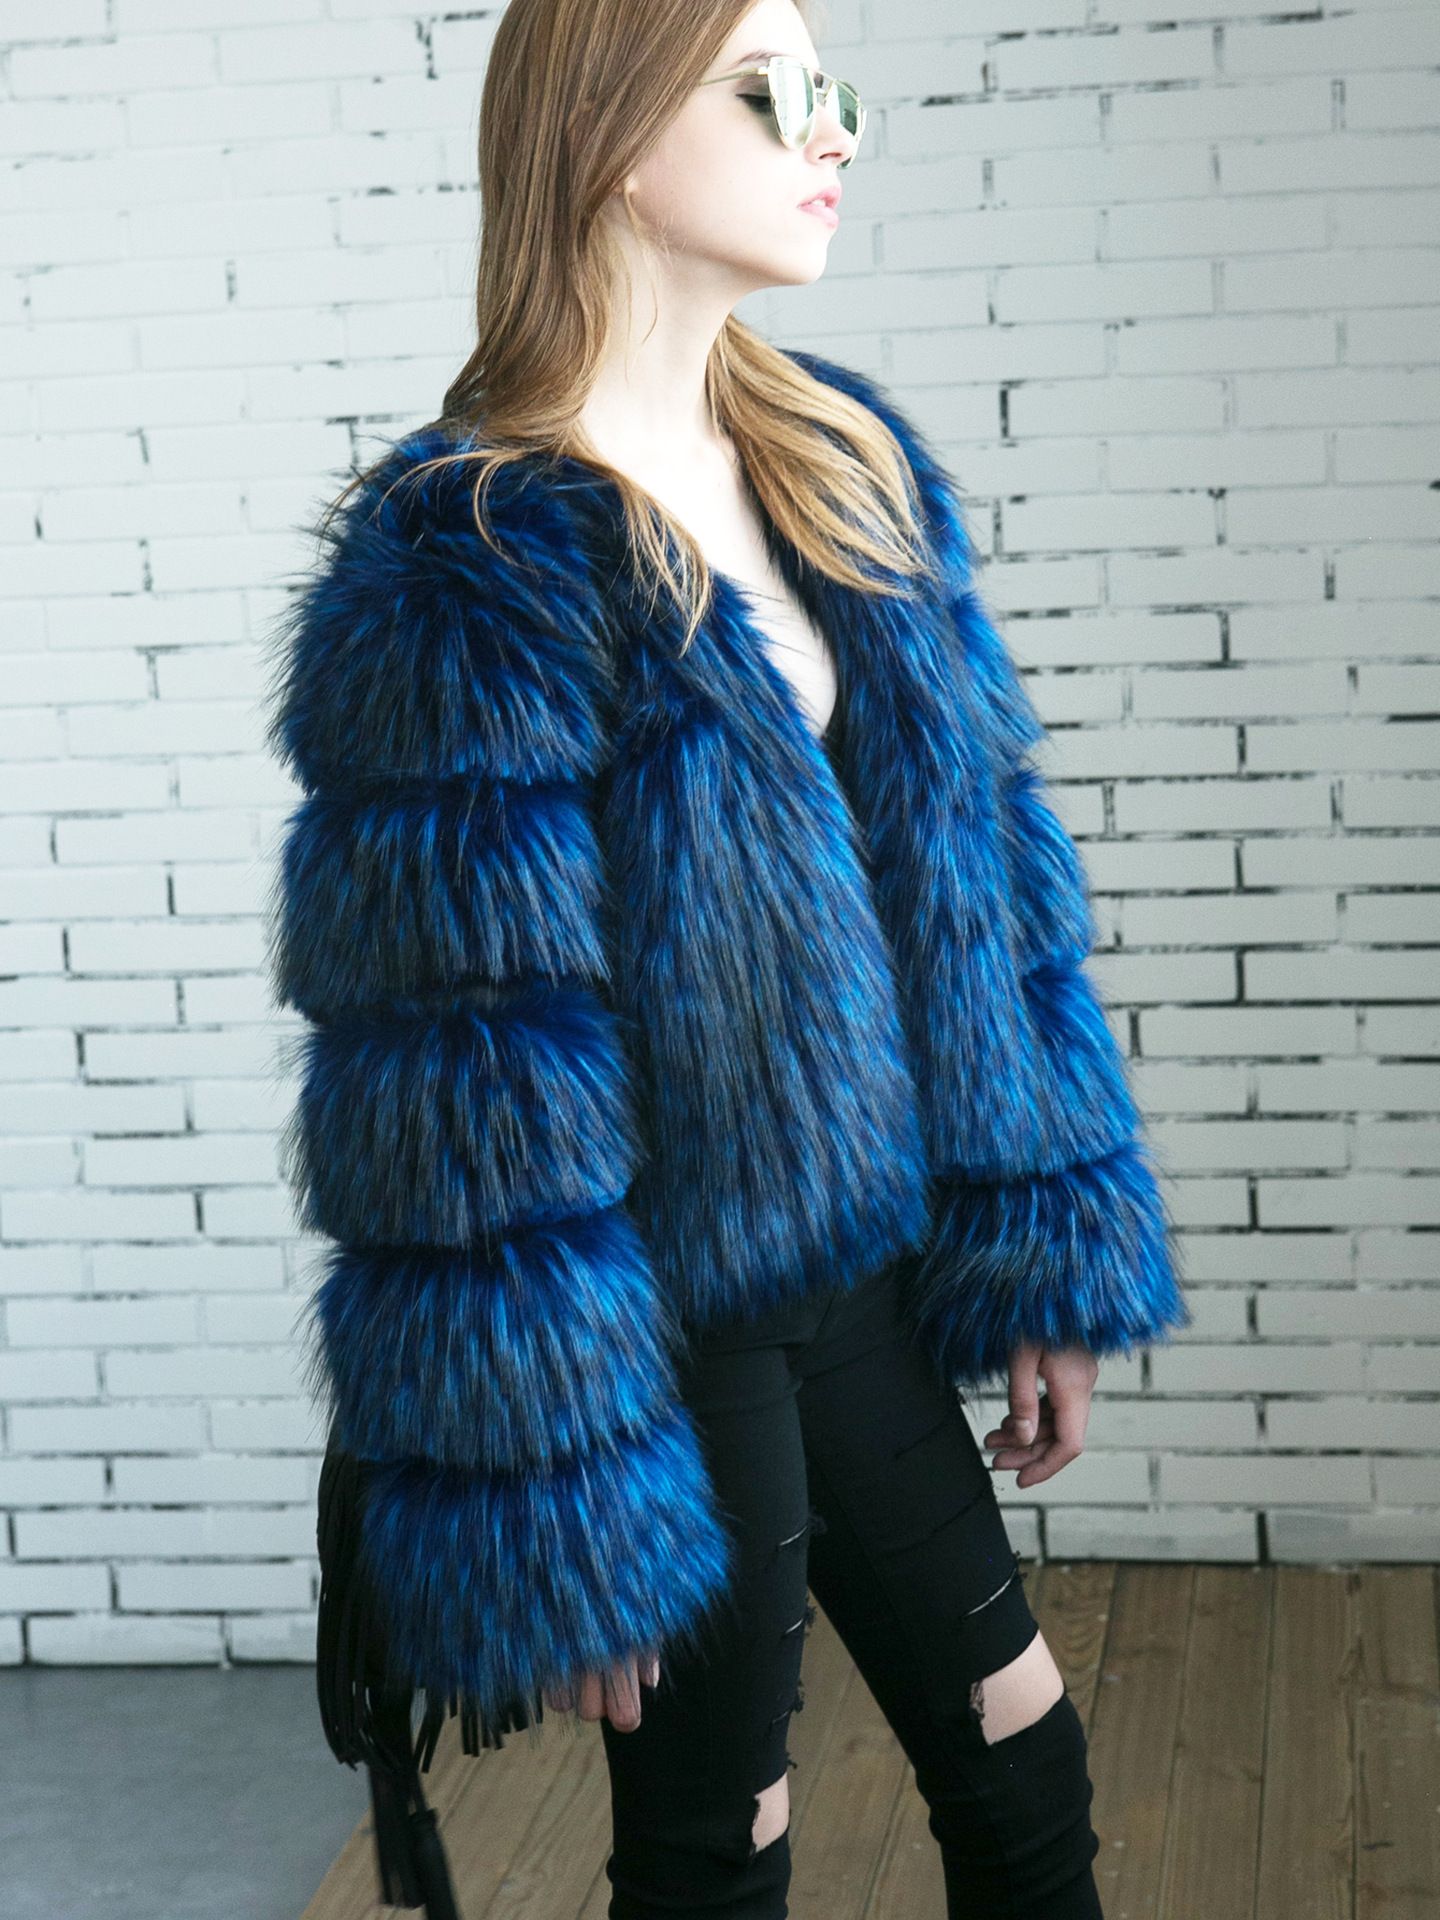 casaco azul feminino